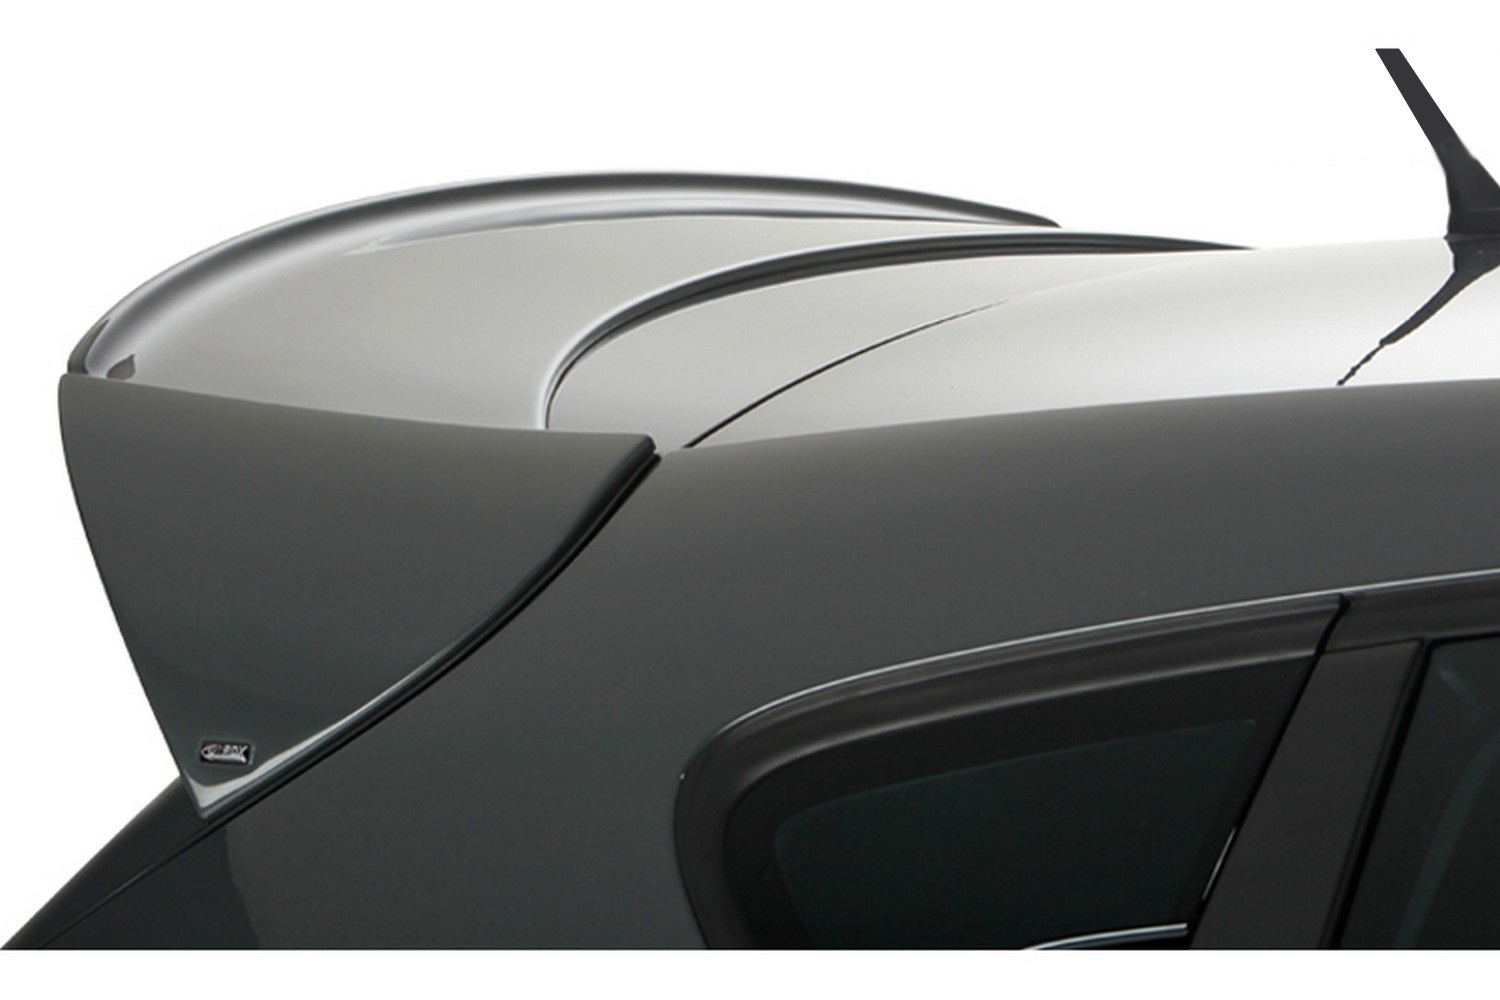 Roof spoiler Seat Leon (1P excl. facelift) PU | CarParts-Expert